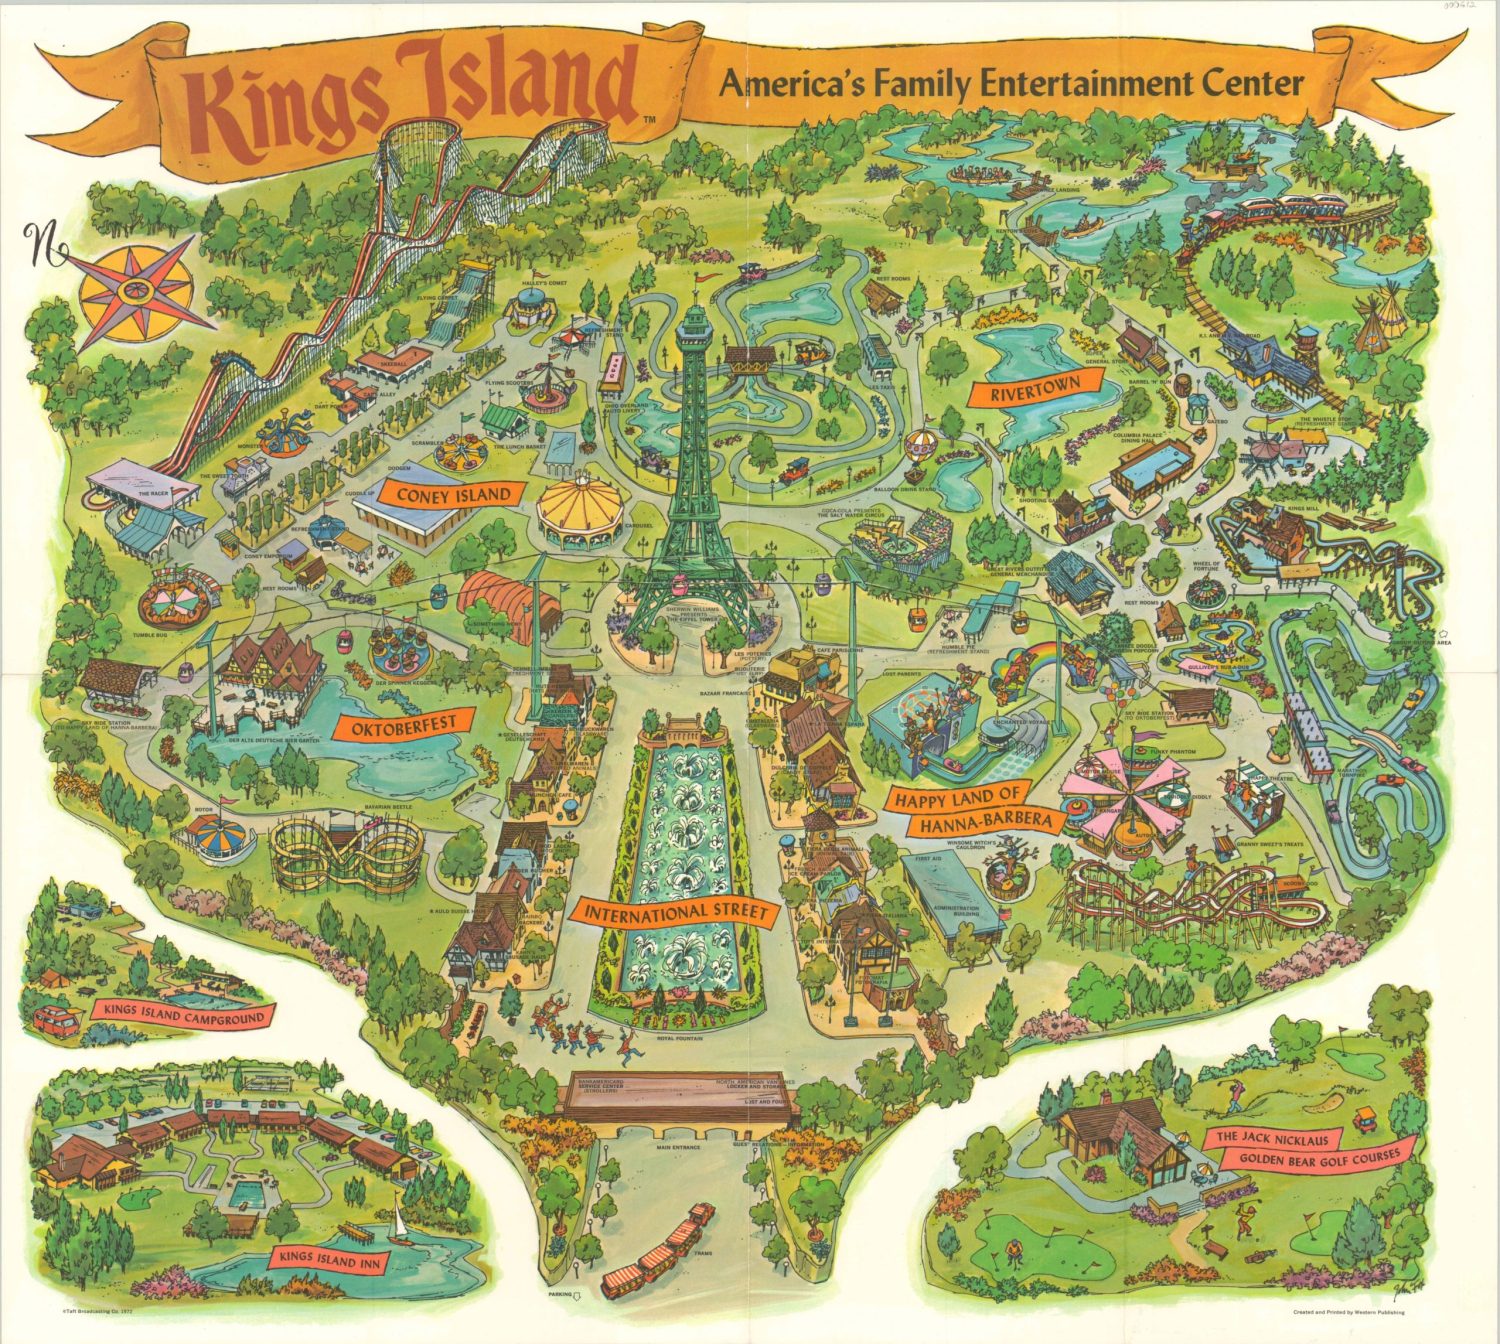 KINGS ISLAND: AMERICAS FAMILY ENTERTAINMENT CENTER